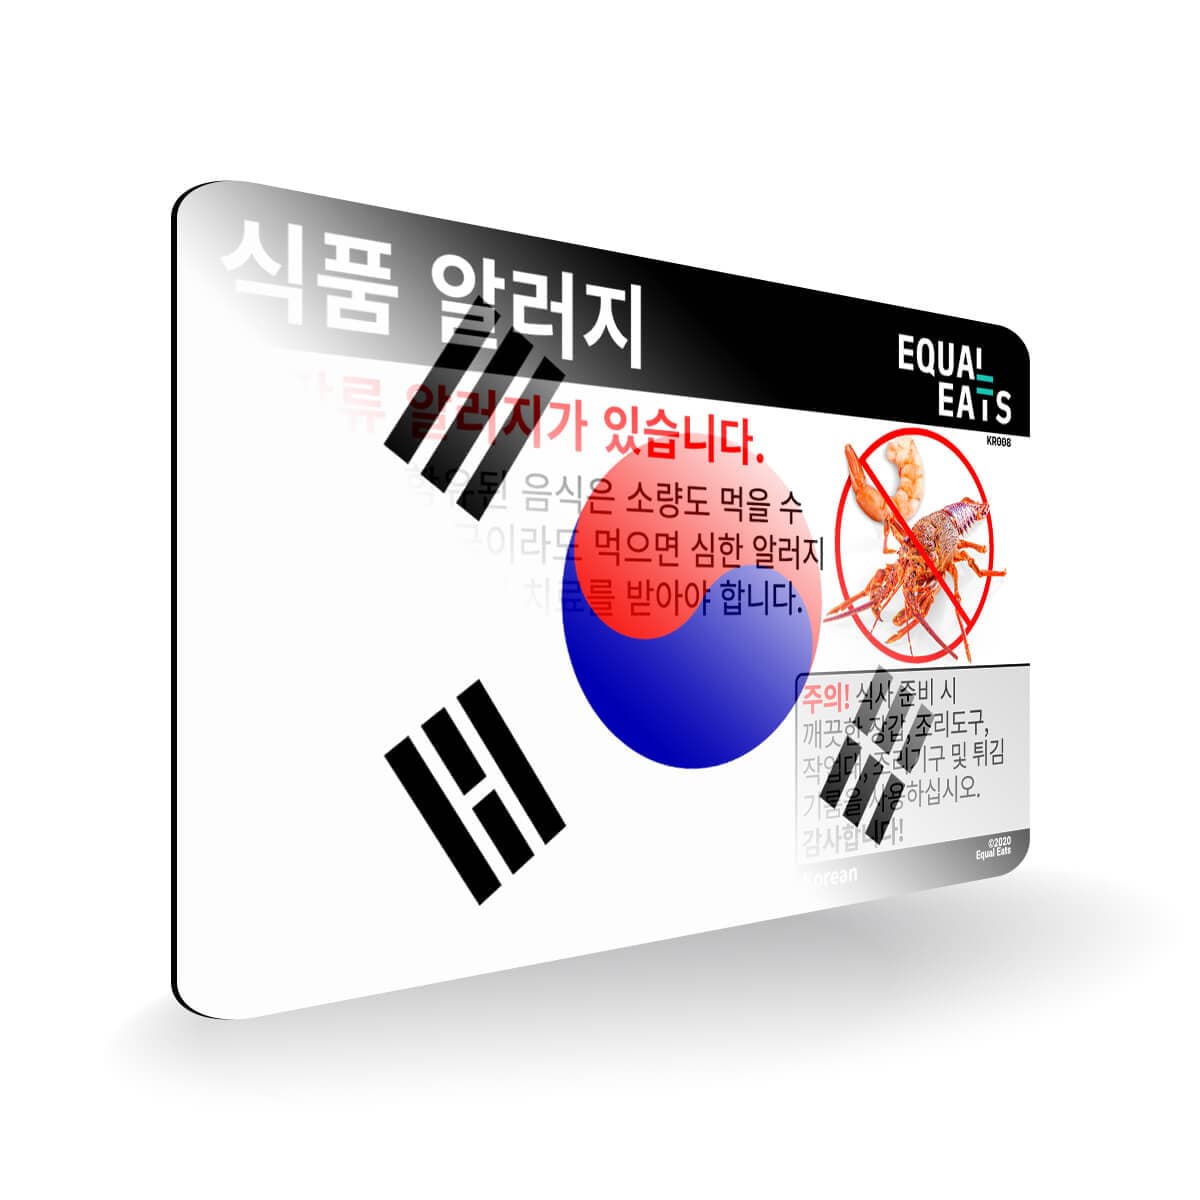 Crustacean Allergy in Korean. Crustacean Allergy Card for Korea